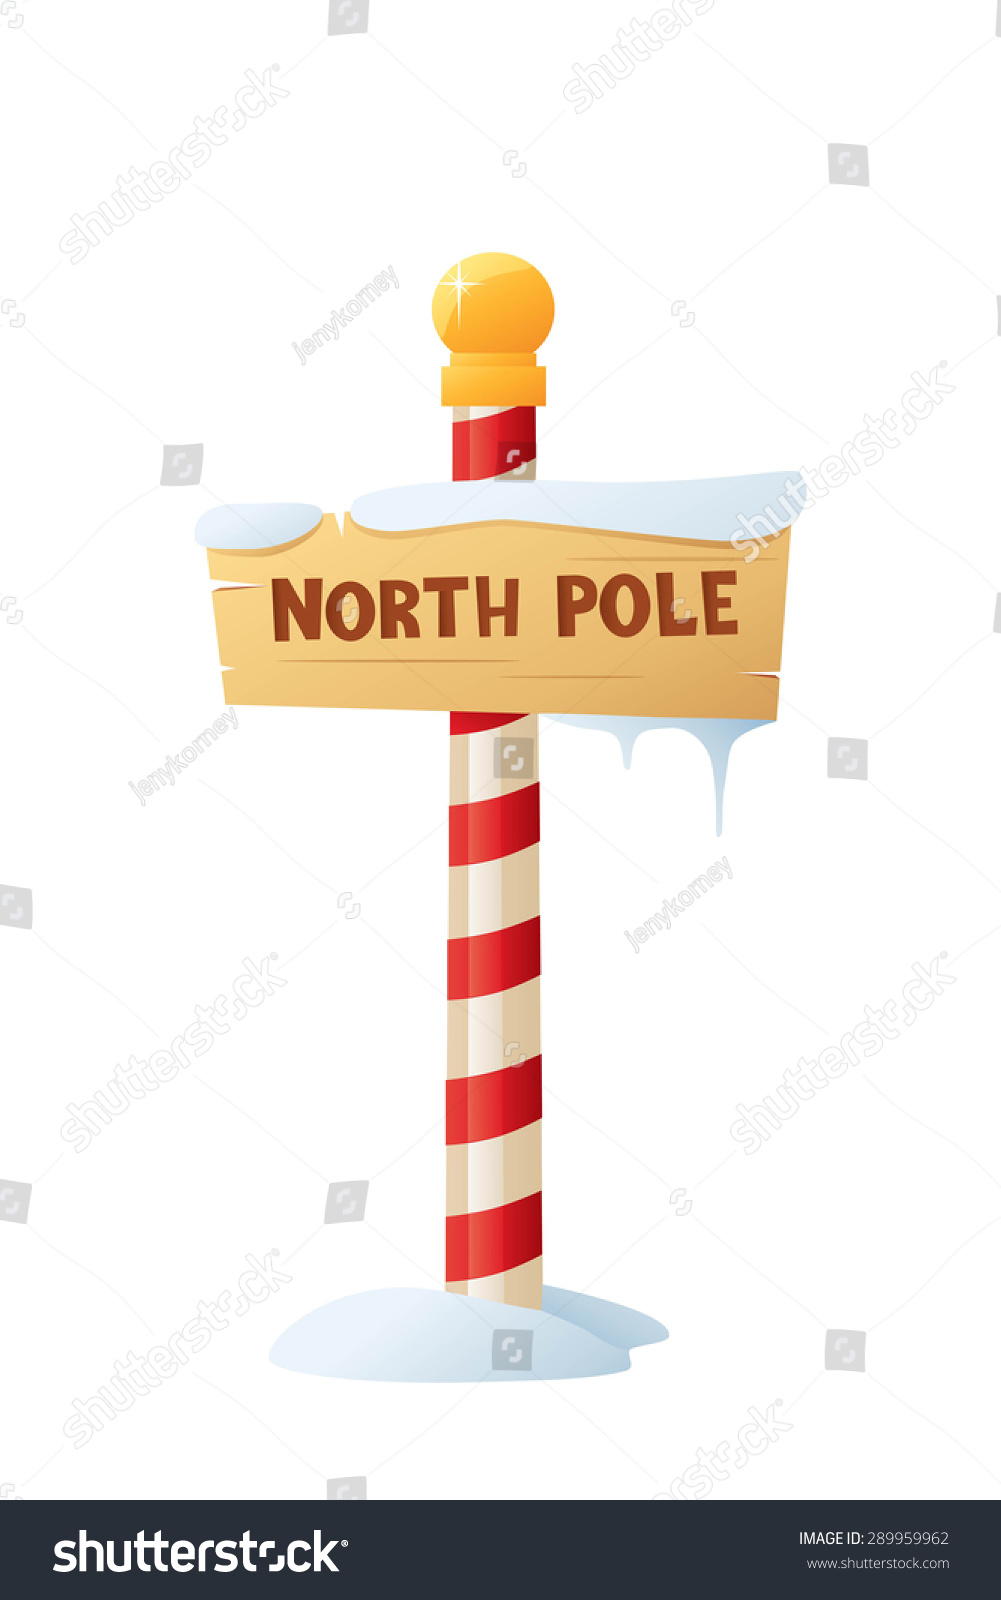 Vector Illustration North Pole Sign Stock Vector 289959962 - Shutterstock